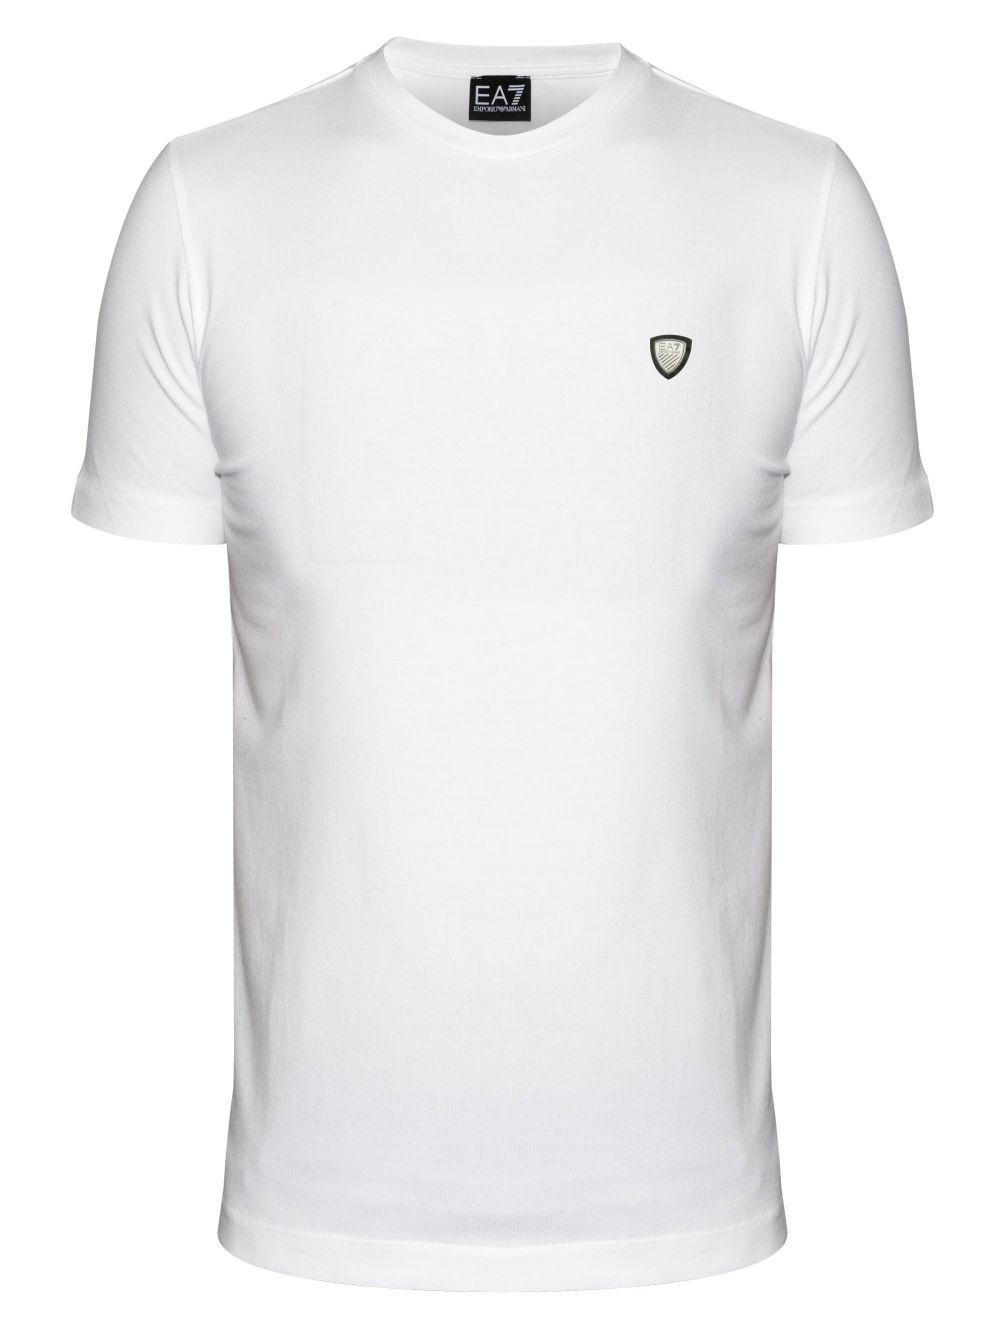 Black and White Shield Logo - EA7 White Shield Logo T Shirt